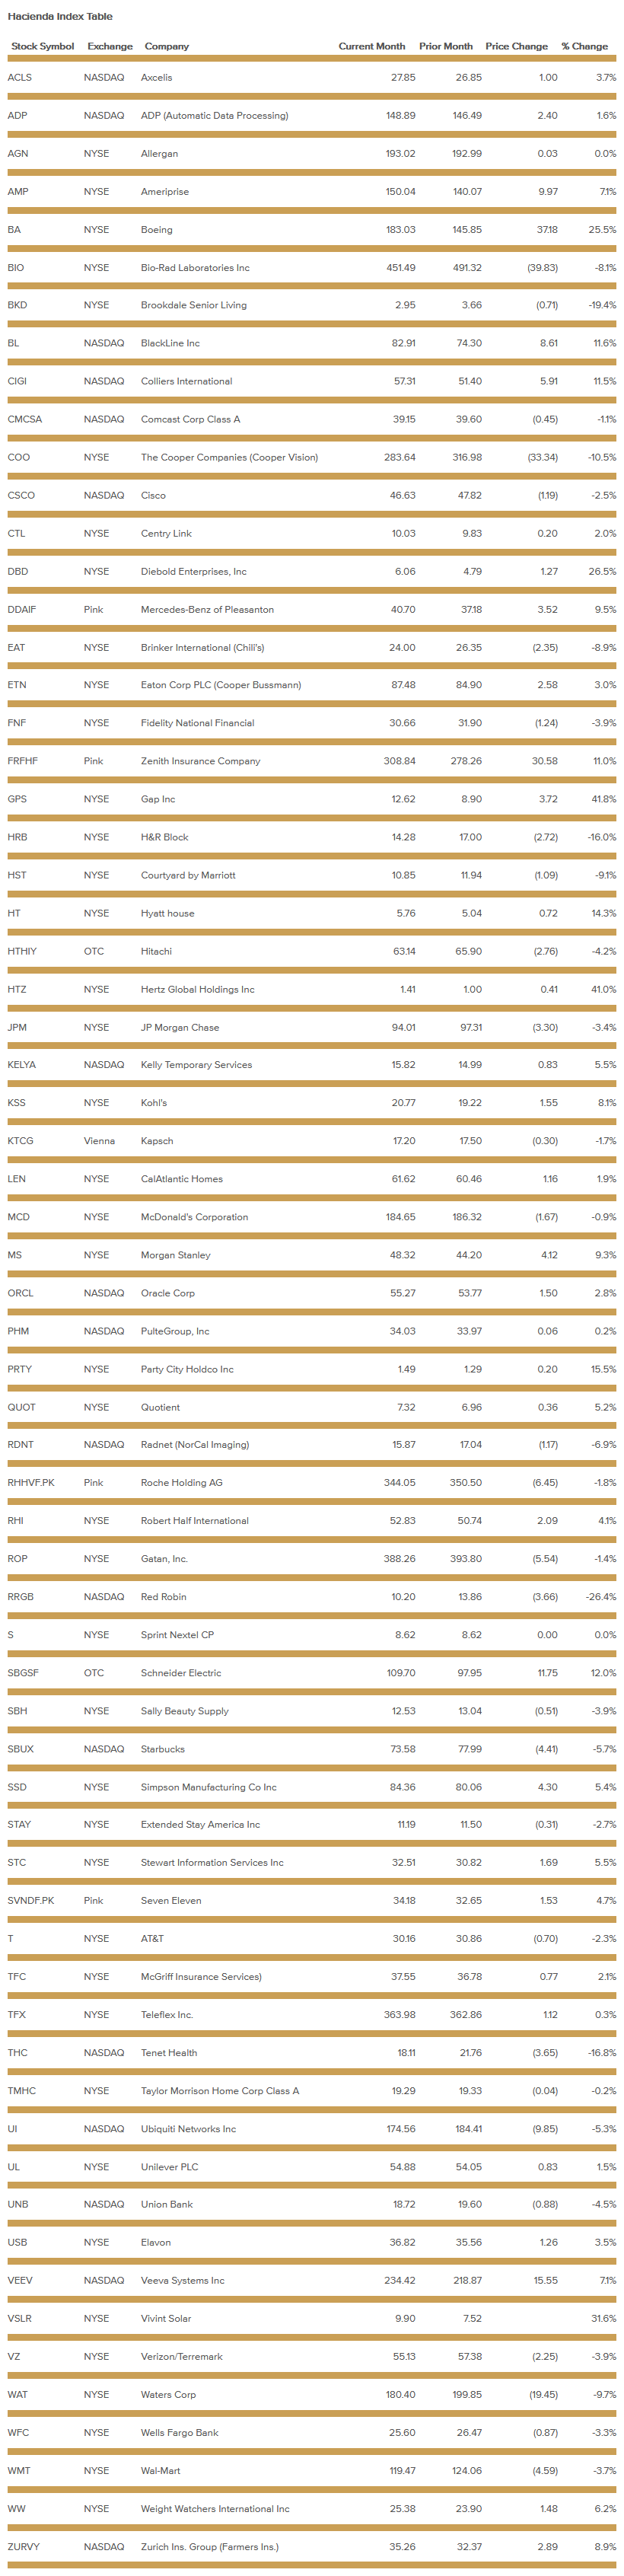 hacienda-index-table-july-2020.png